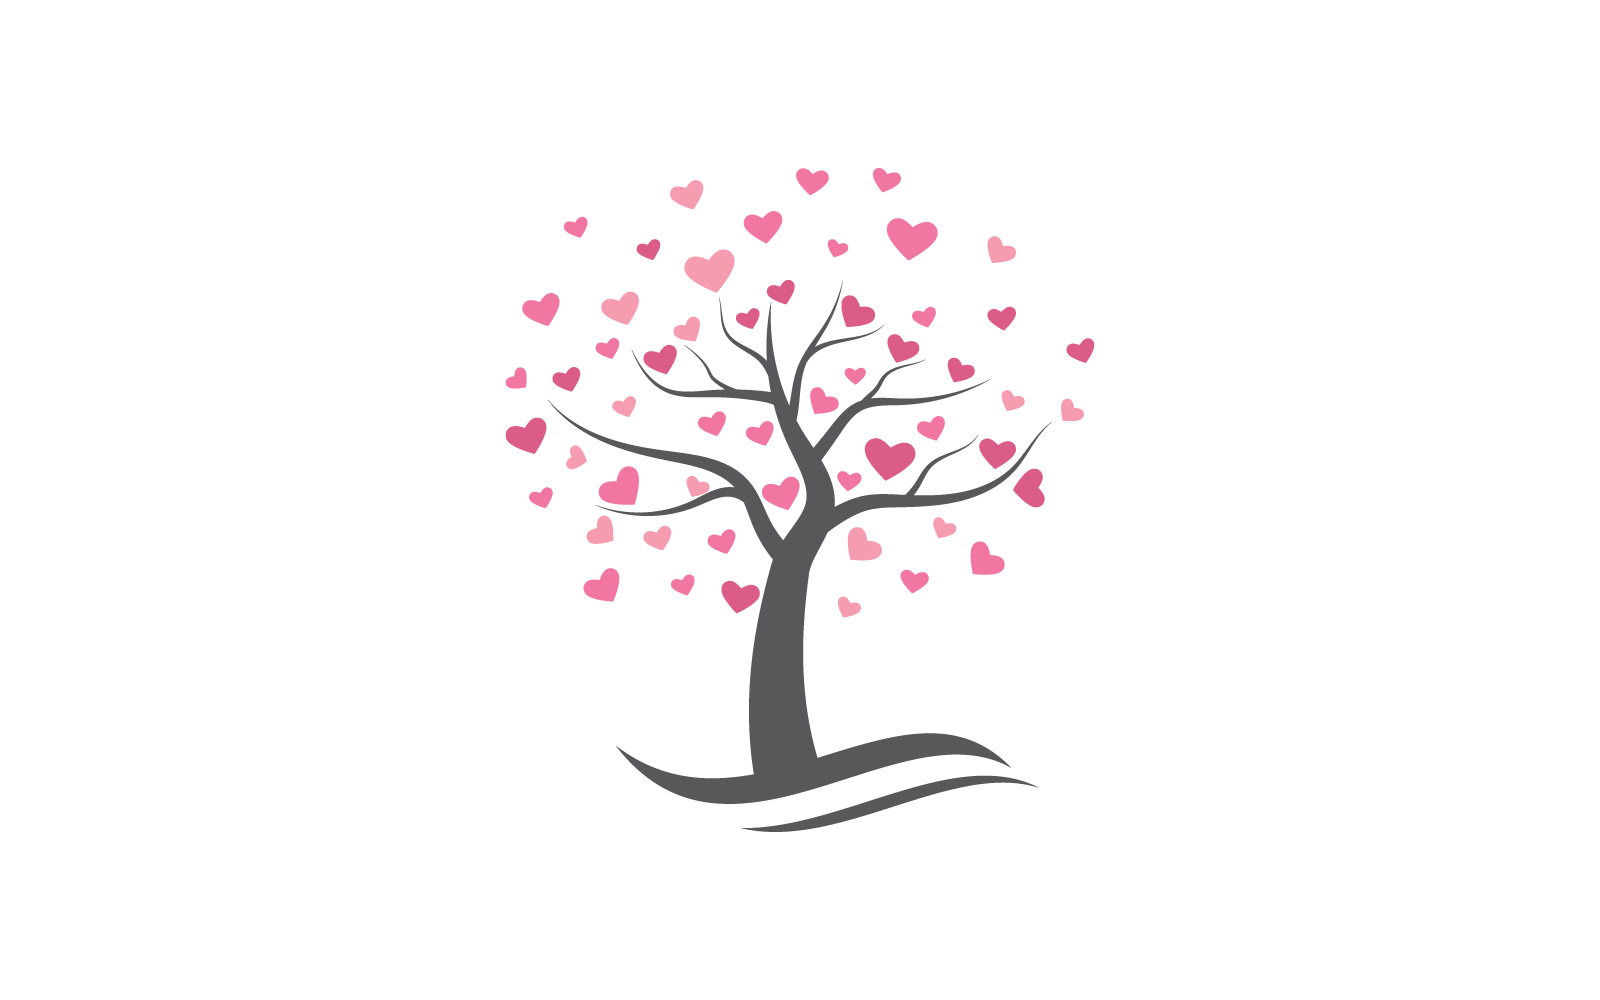 Tree With Heart Leaves Logo illustration Vector Flat Design